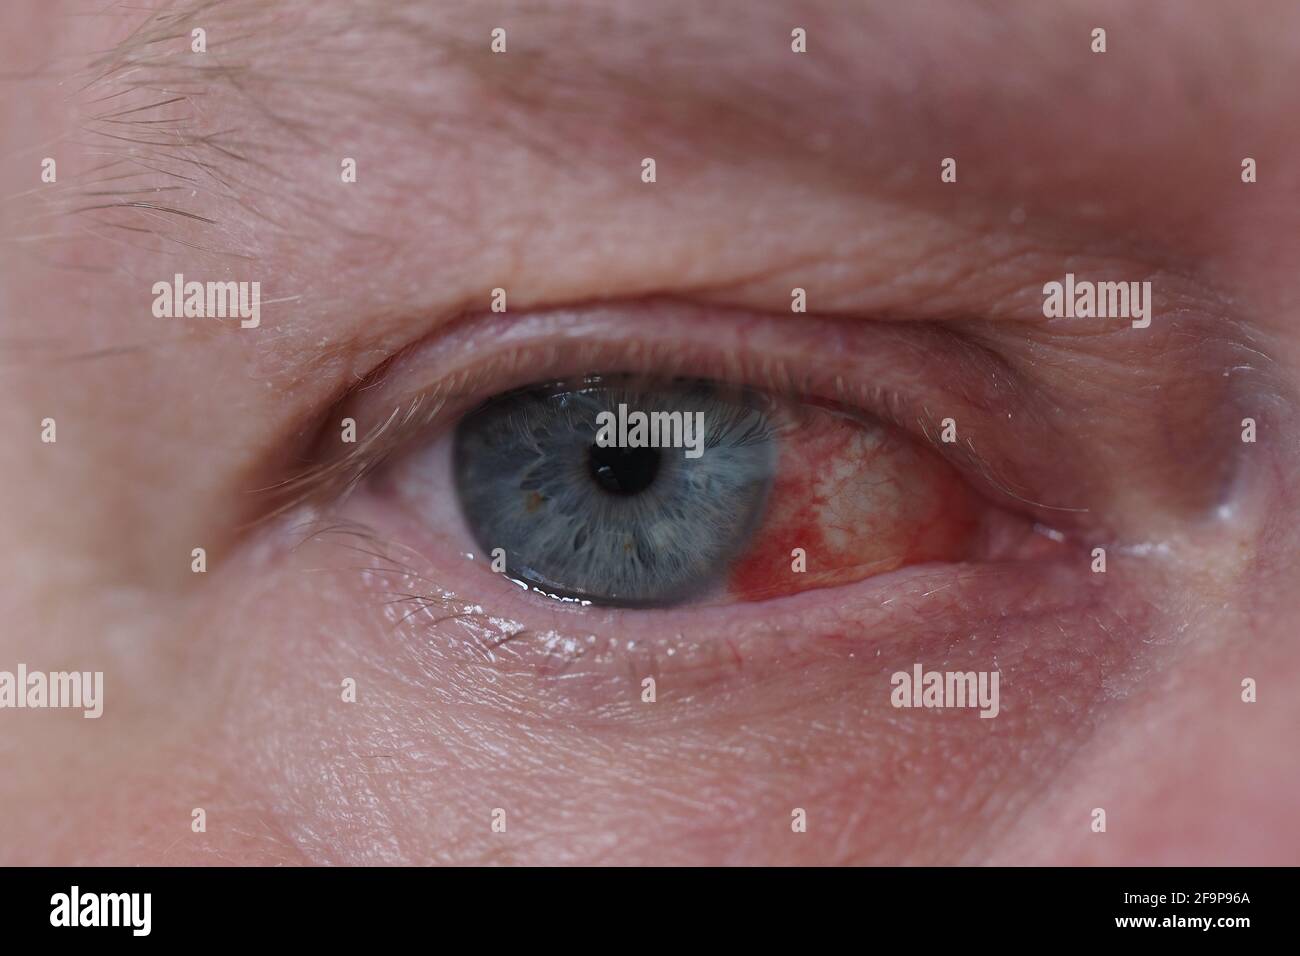 A man's eye. It's a macro- Eye disease, hemorrhage in the eye. Stock Photo